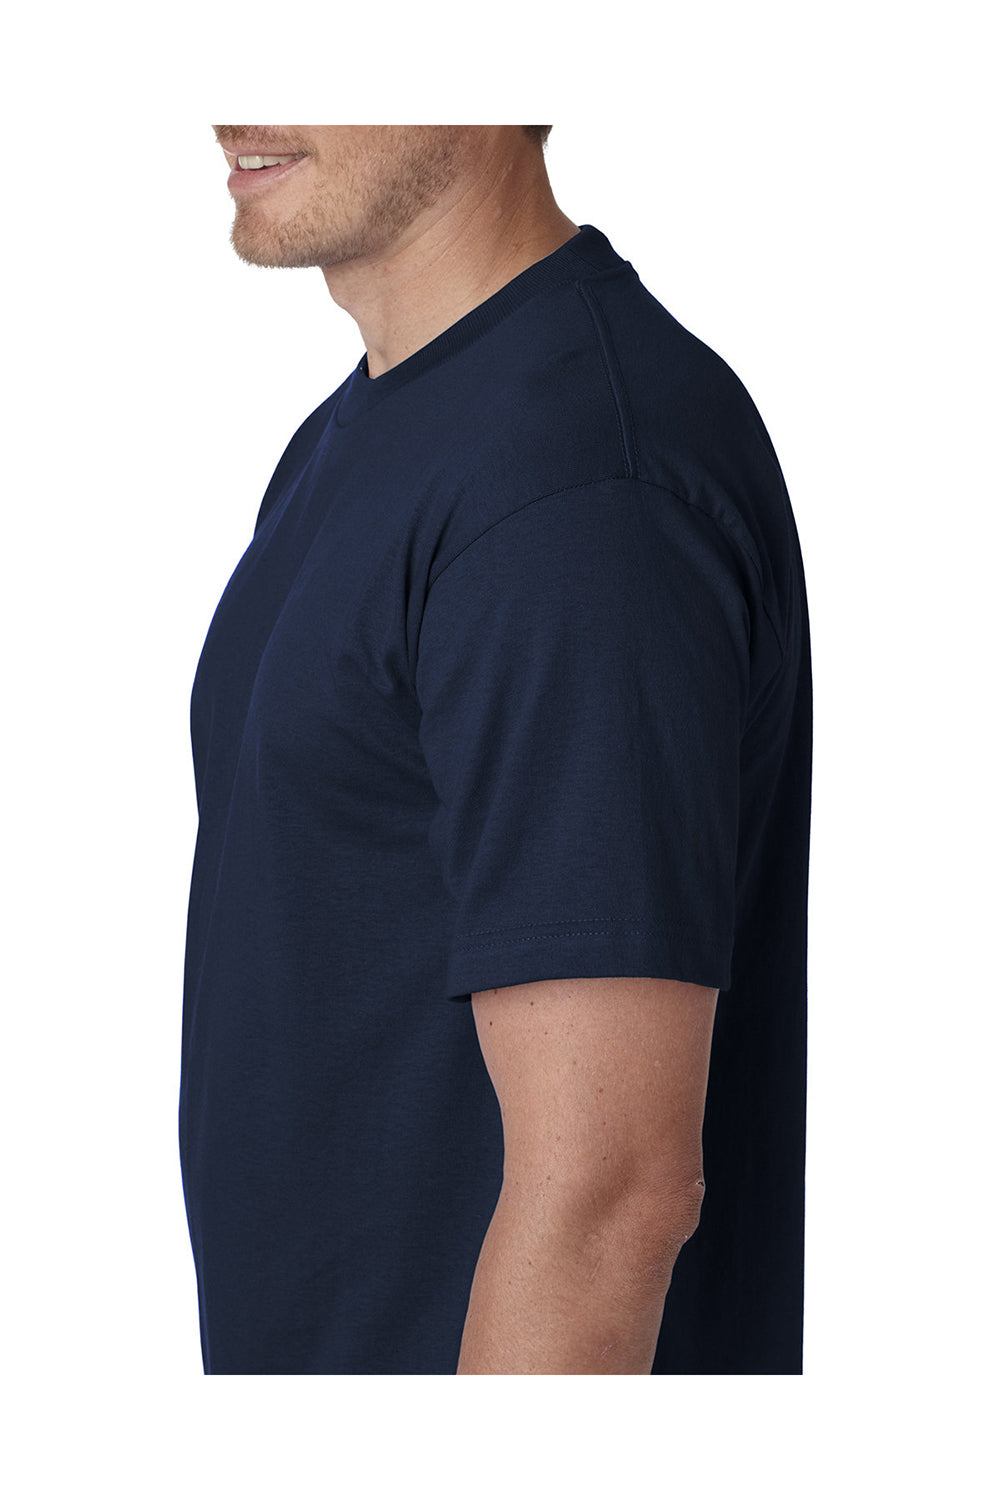 Bayside BA5100 Mens USA Made Short Sleeve Crewneck T-Shirt Navy Blue Model Side